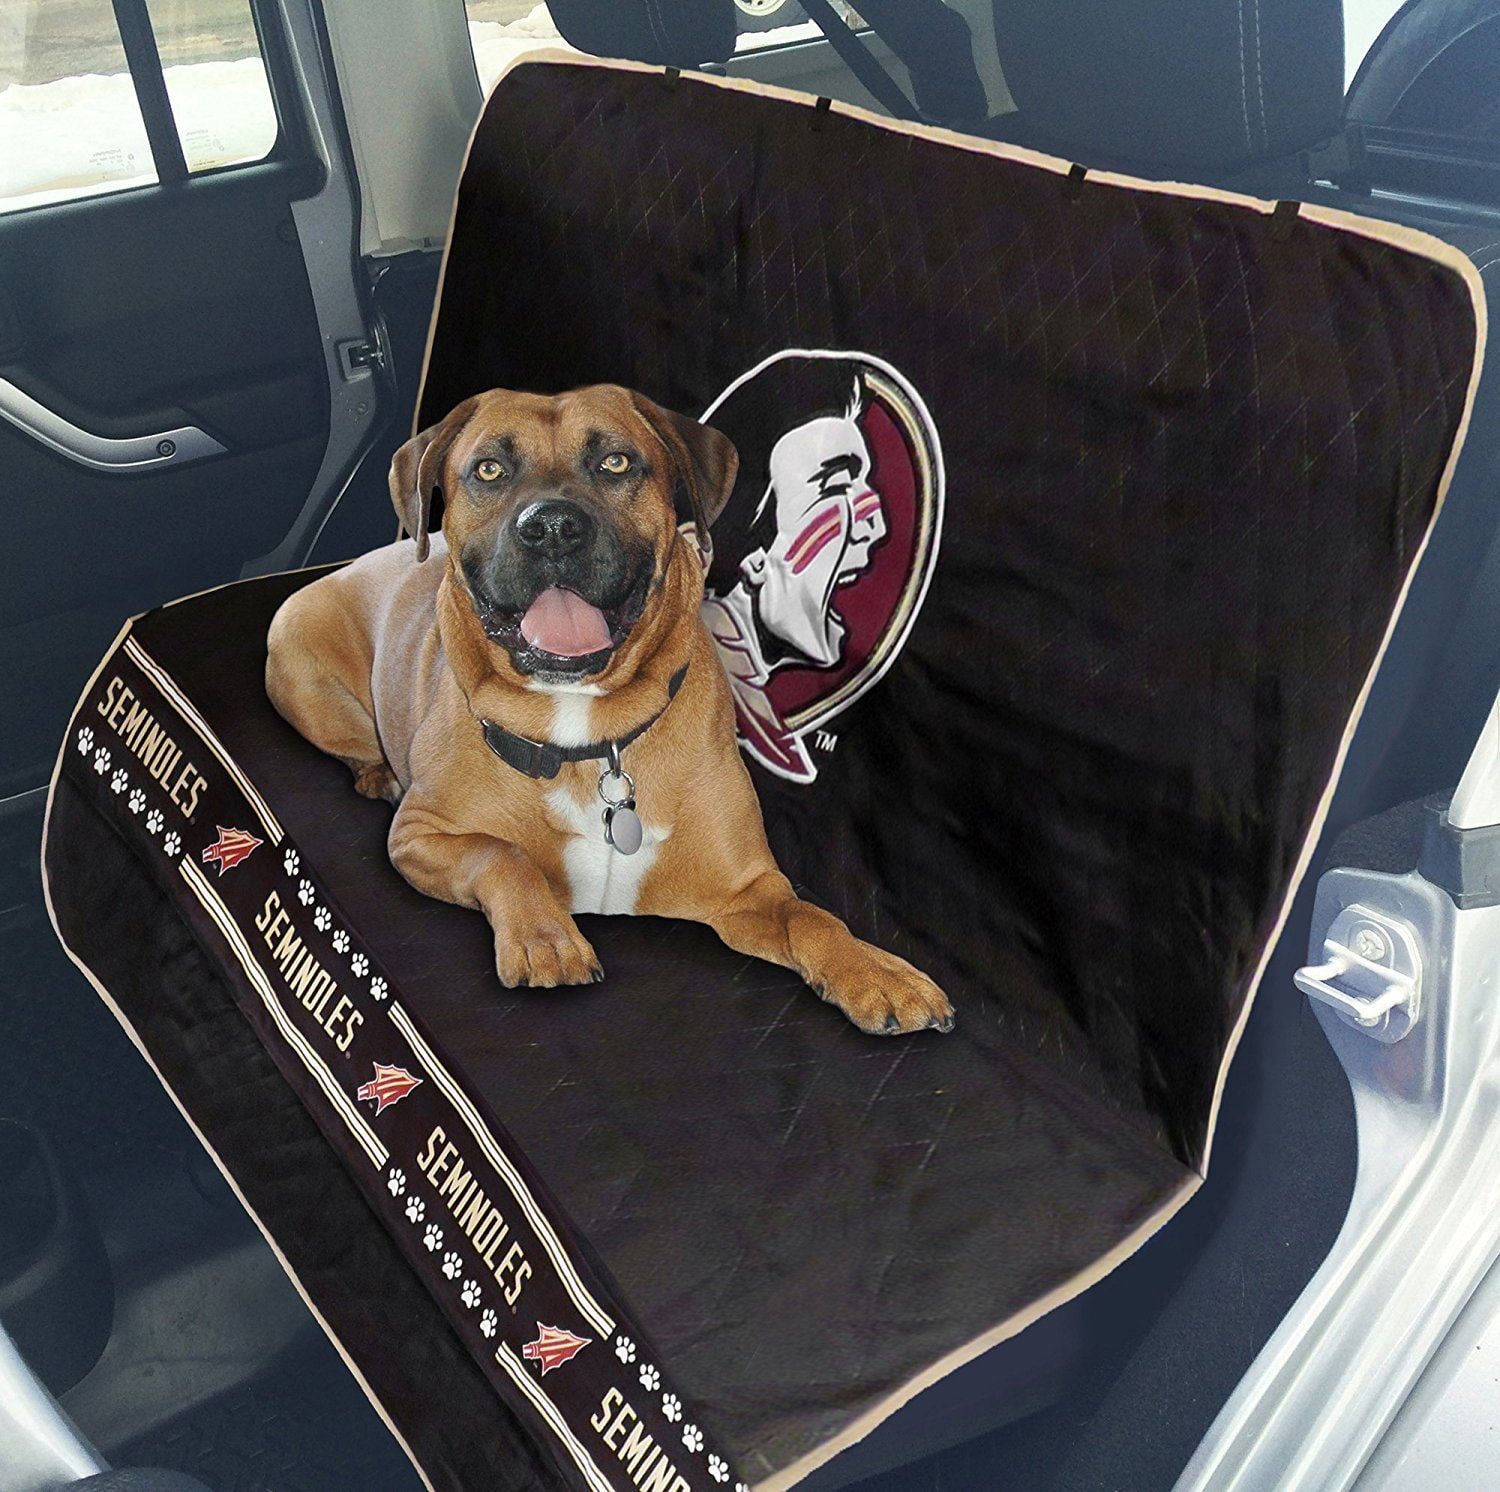 NCAA Florida State Seminoles Car Seat Cover